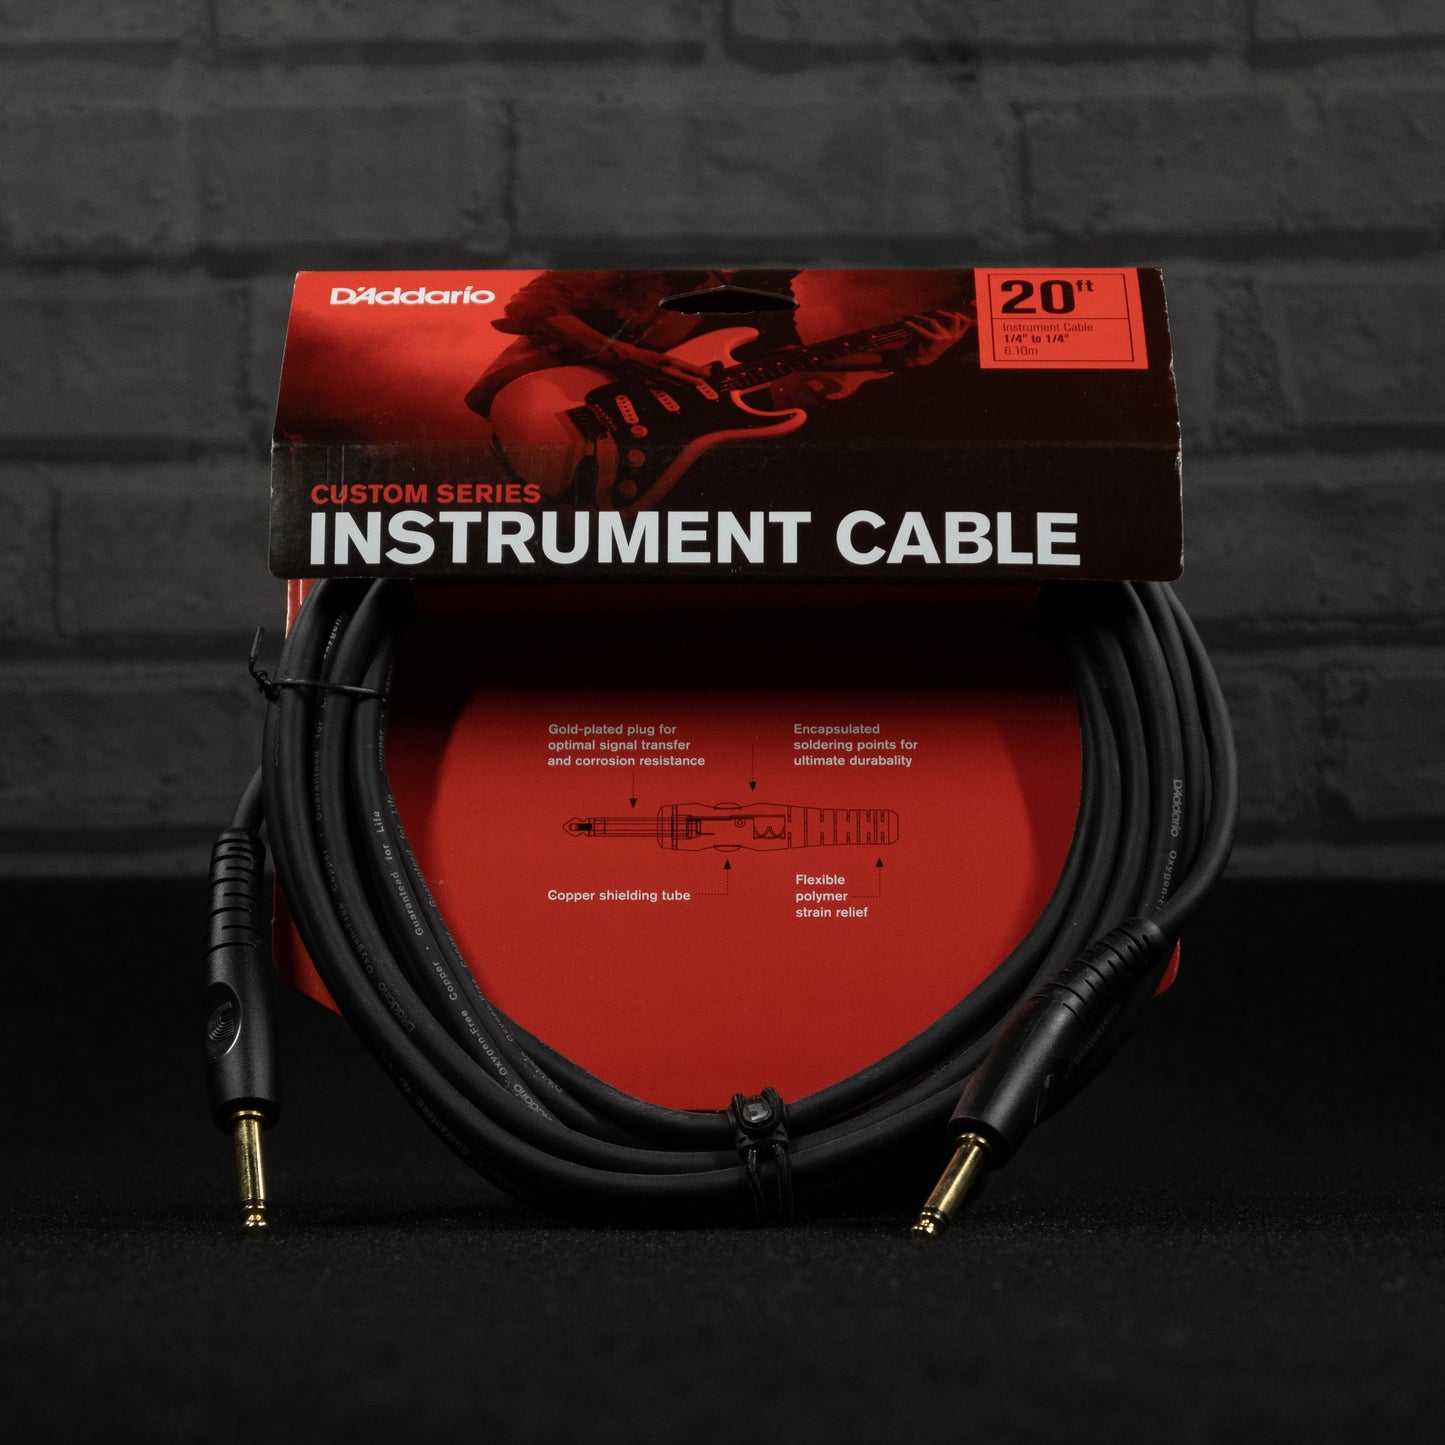 D'Addario Custom Series Instrument Cable 20 Feet PW G 20